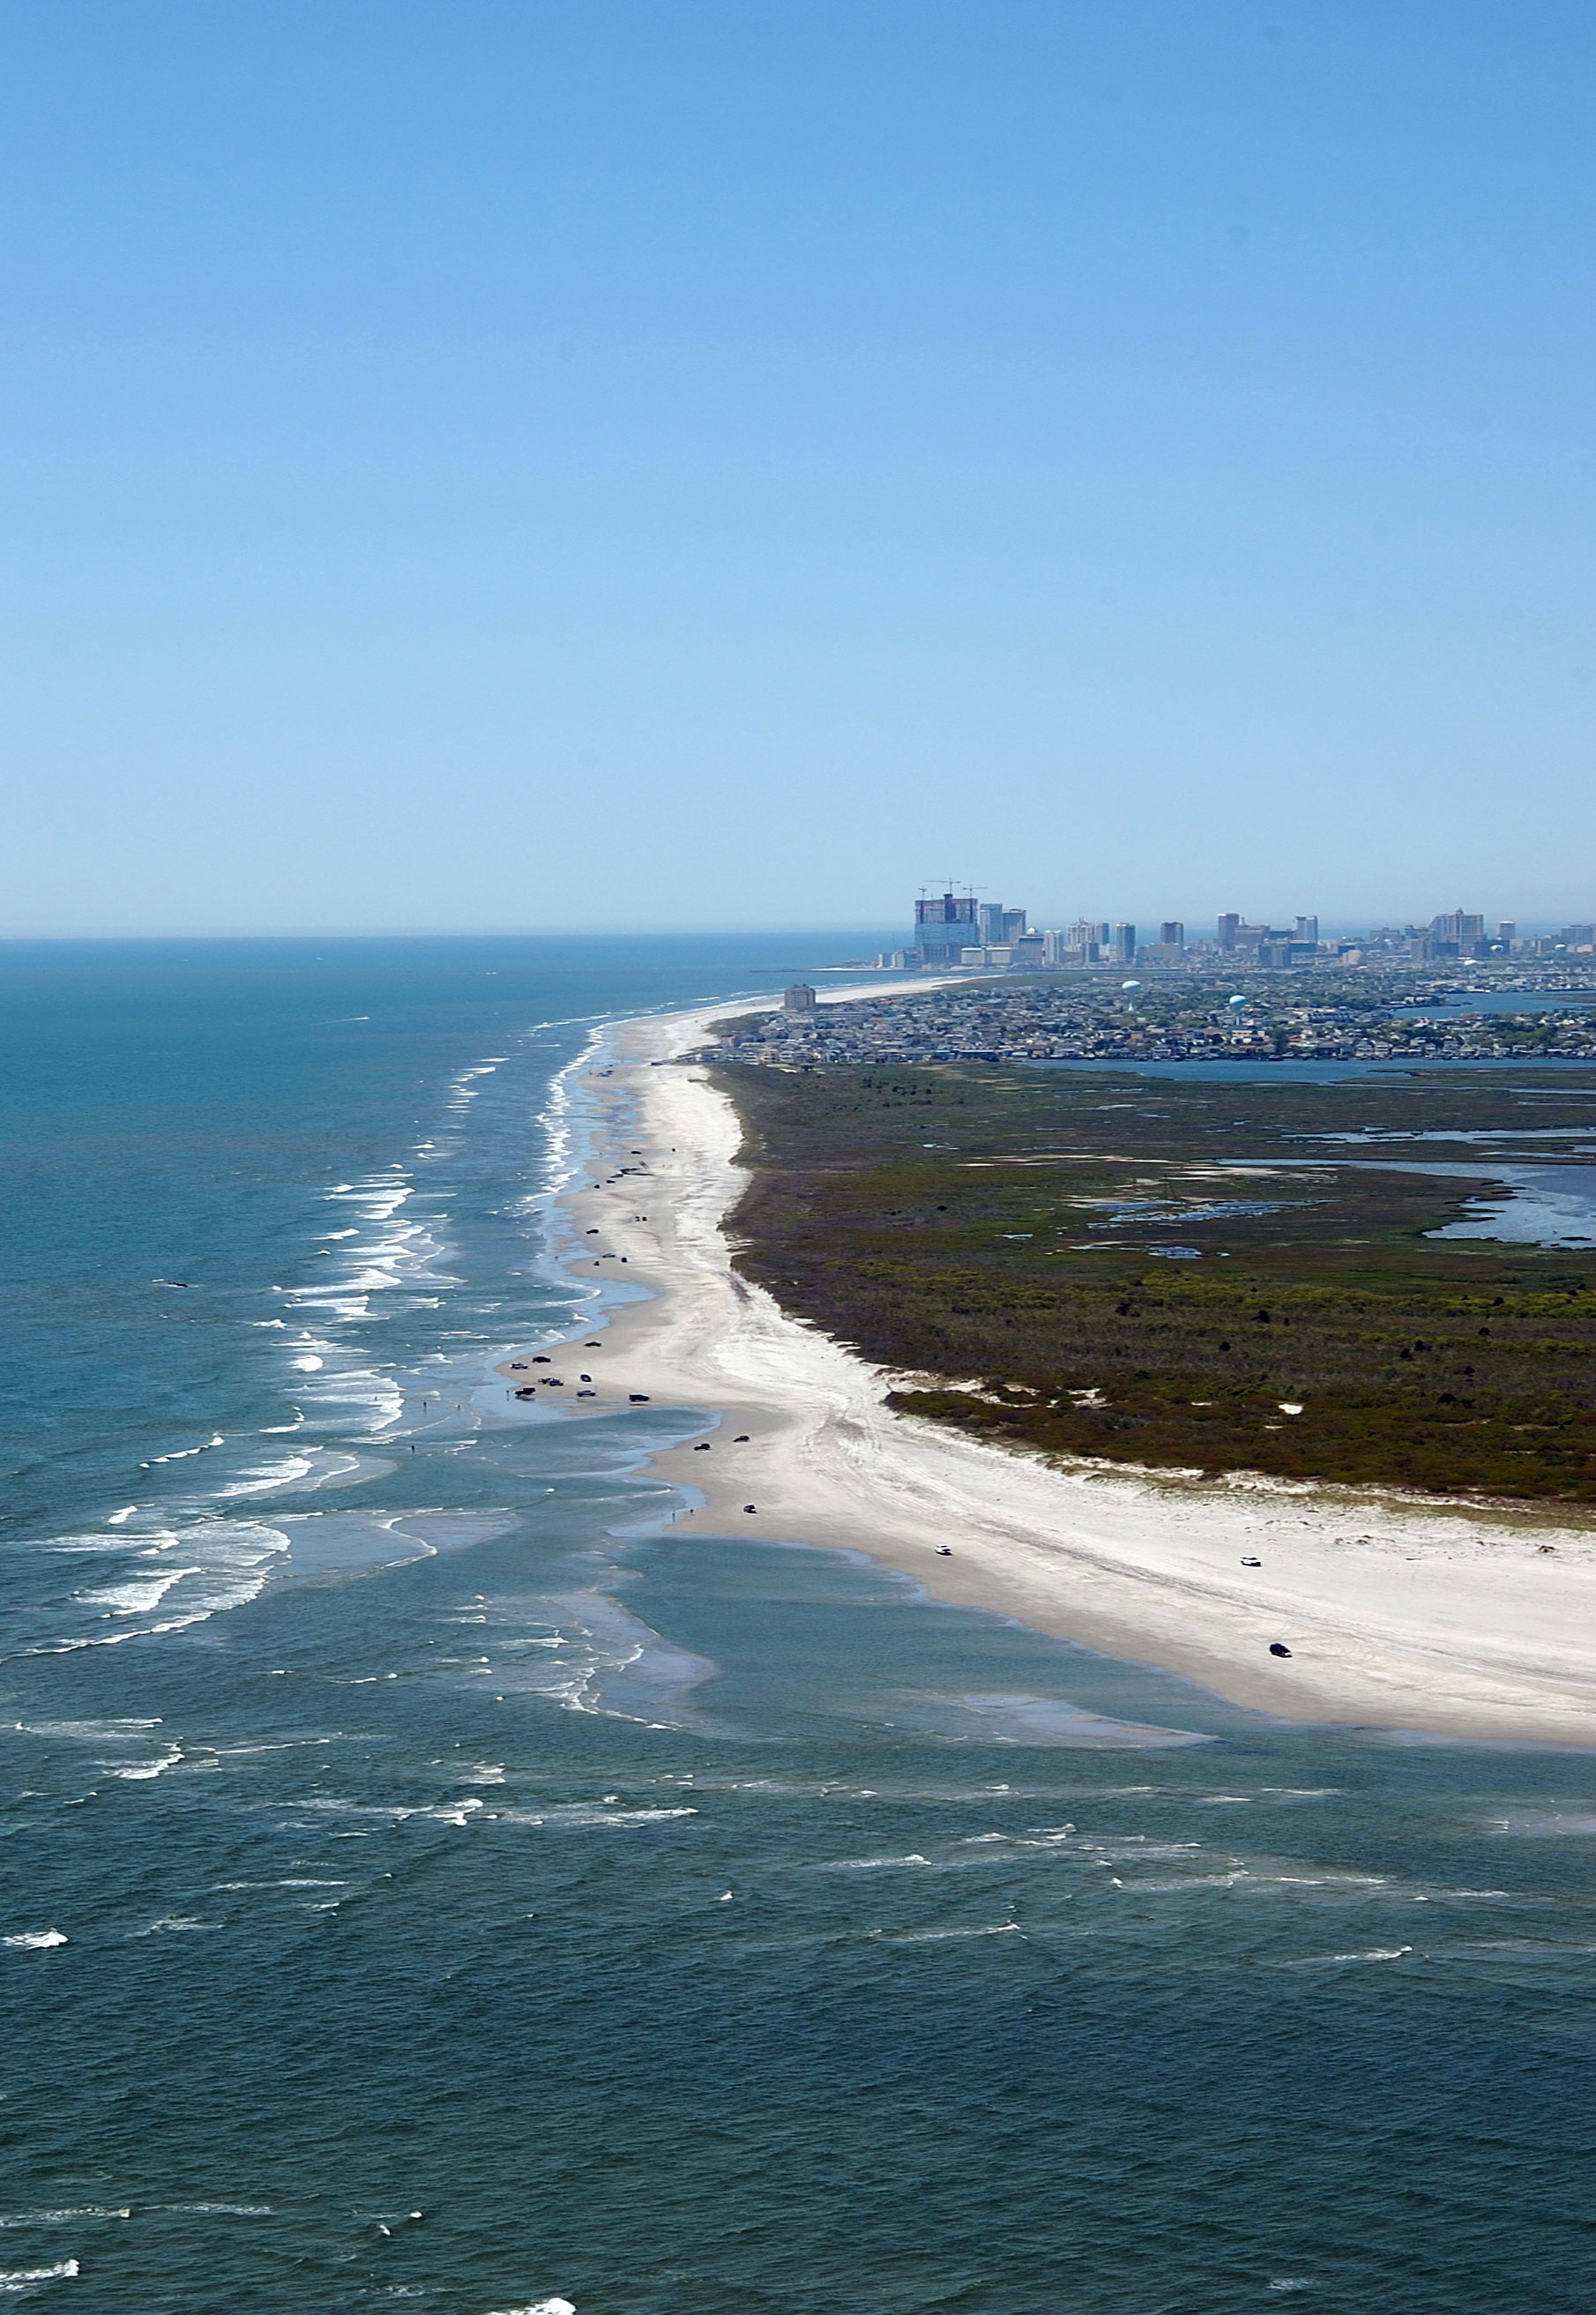 Photograph showing the coastline near Atlantic City, New Jersey